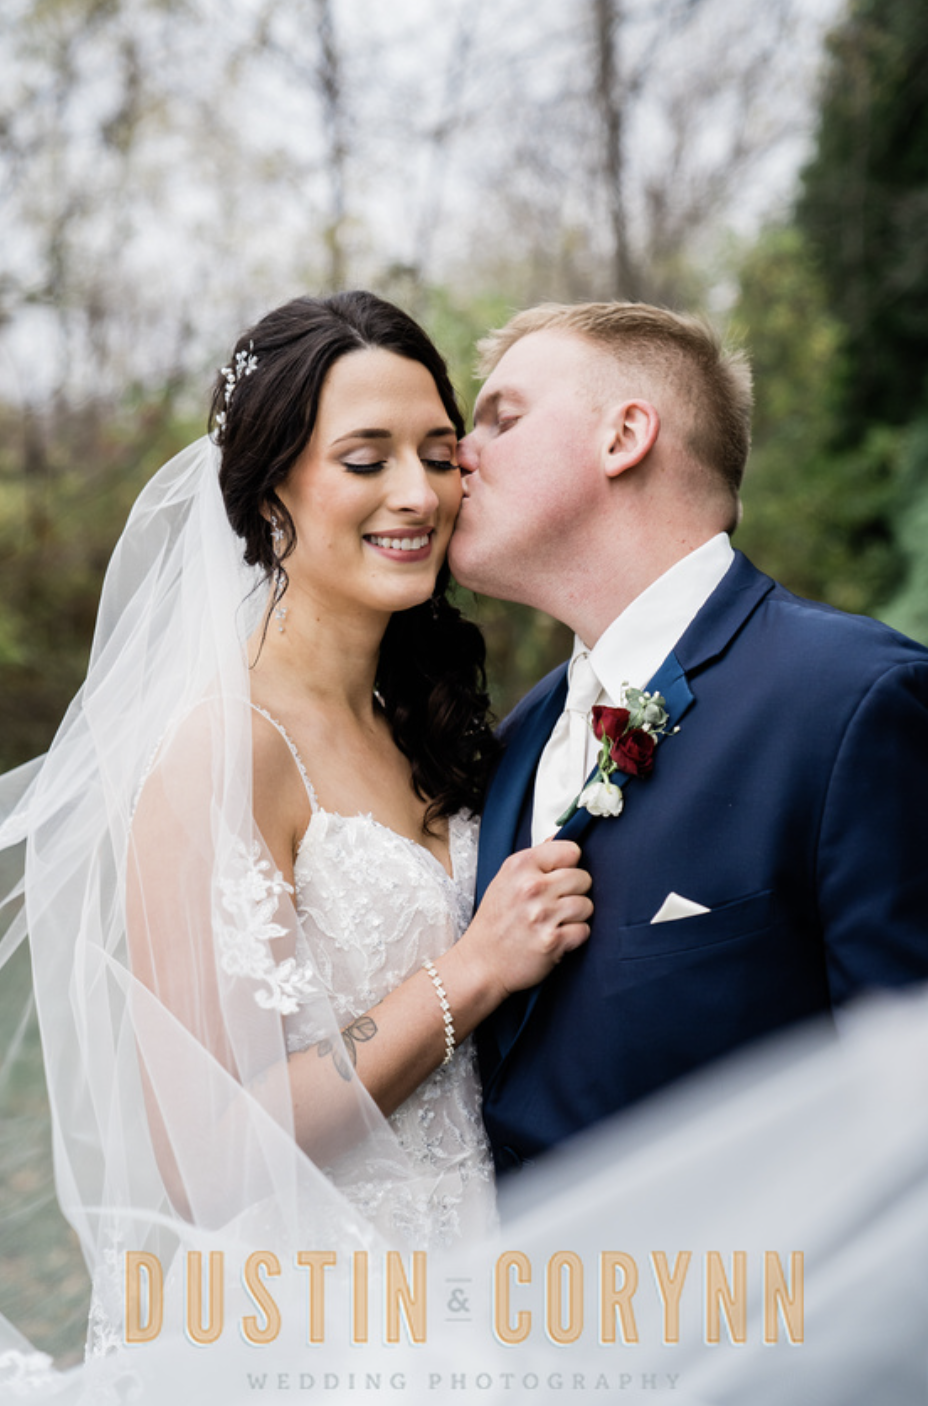 Fort Wayne wedding photographer captures groom kissing bride's cheek